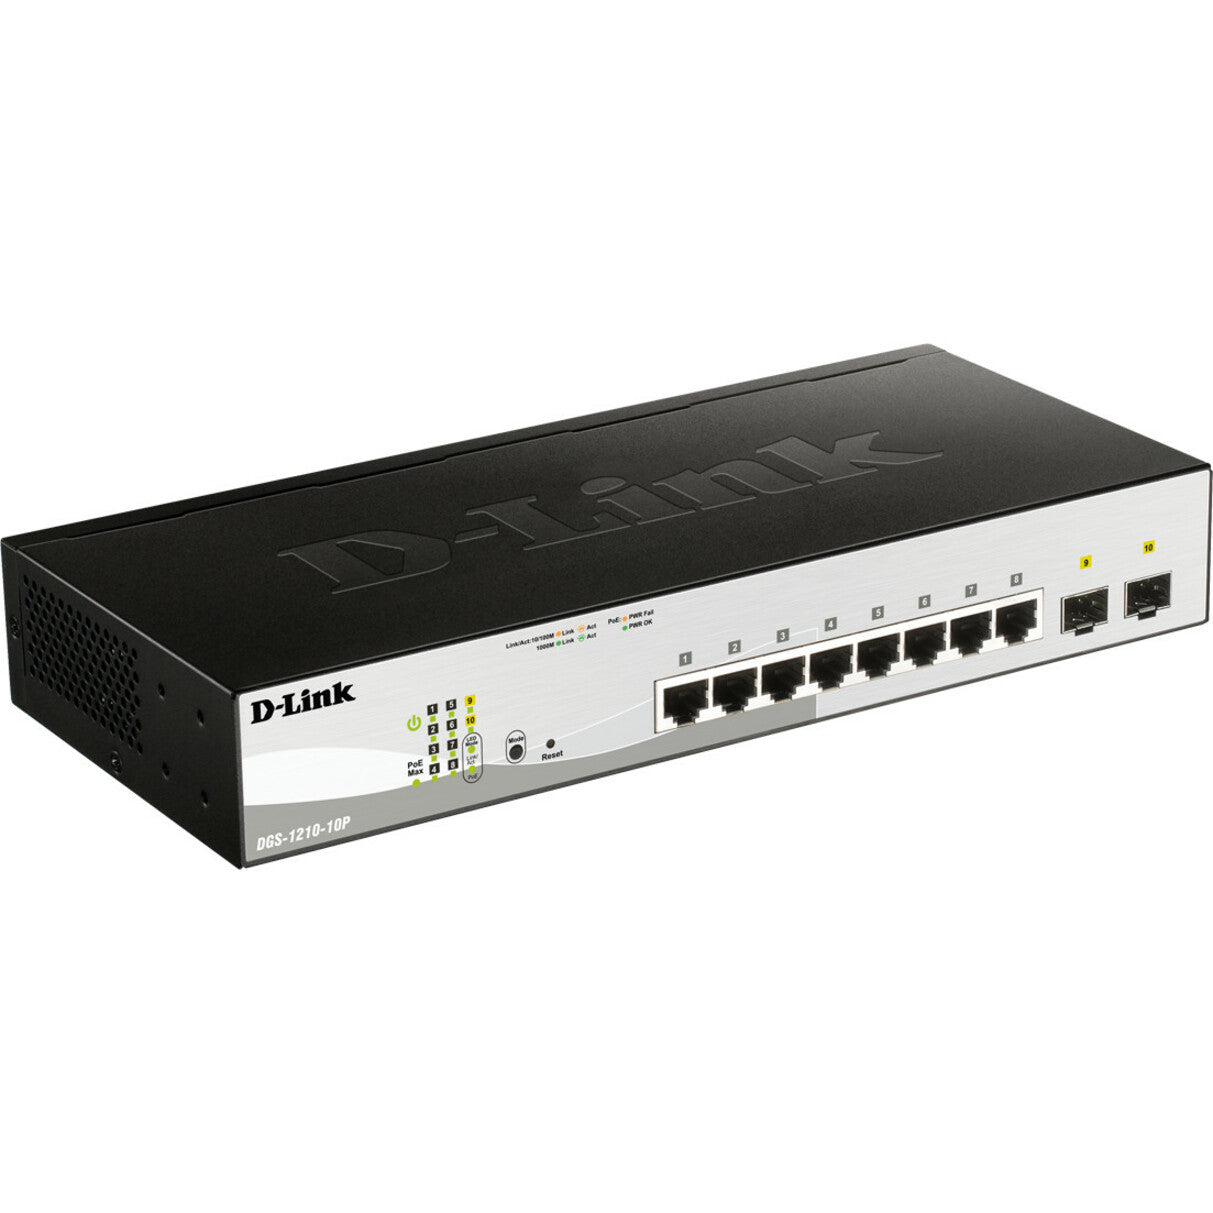 D-Link DGS-1210-10MP Ethernet Switch, 8-Port Gigabit with 2 SFP Slots, Lifetime Warranty